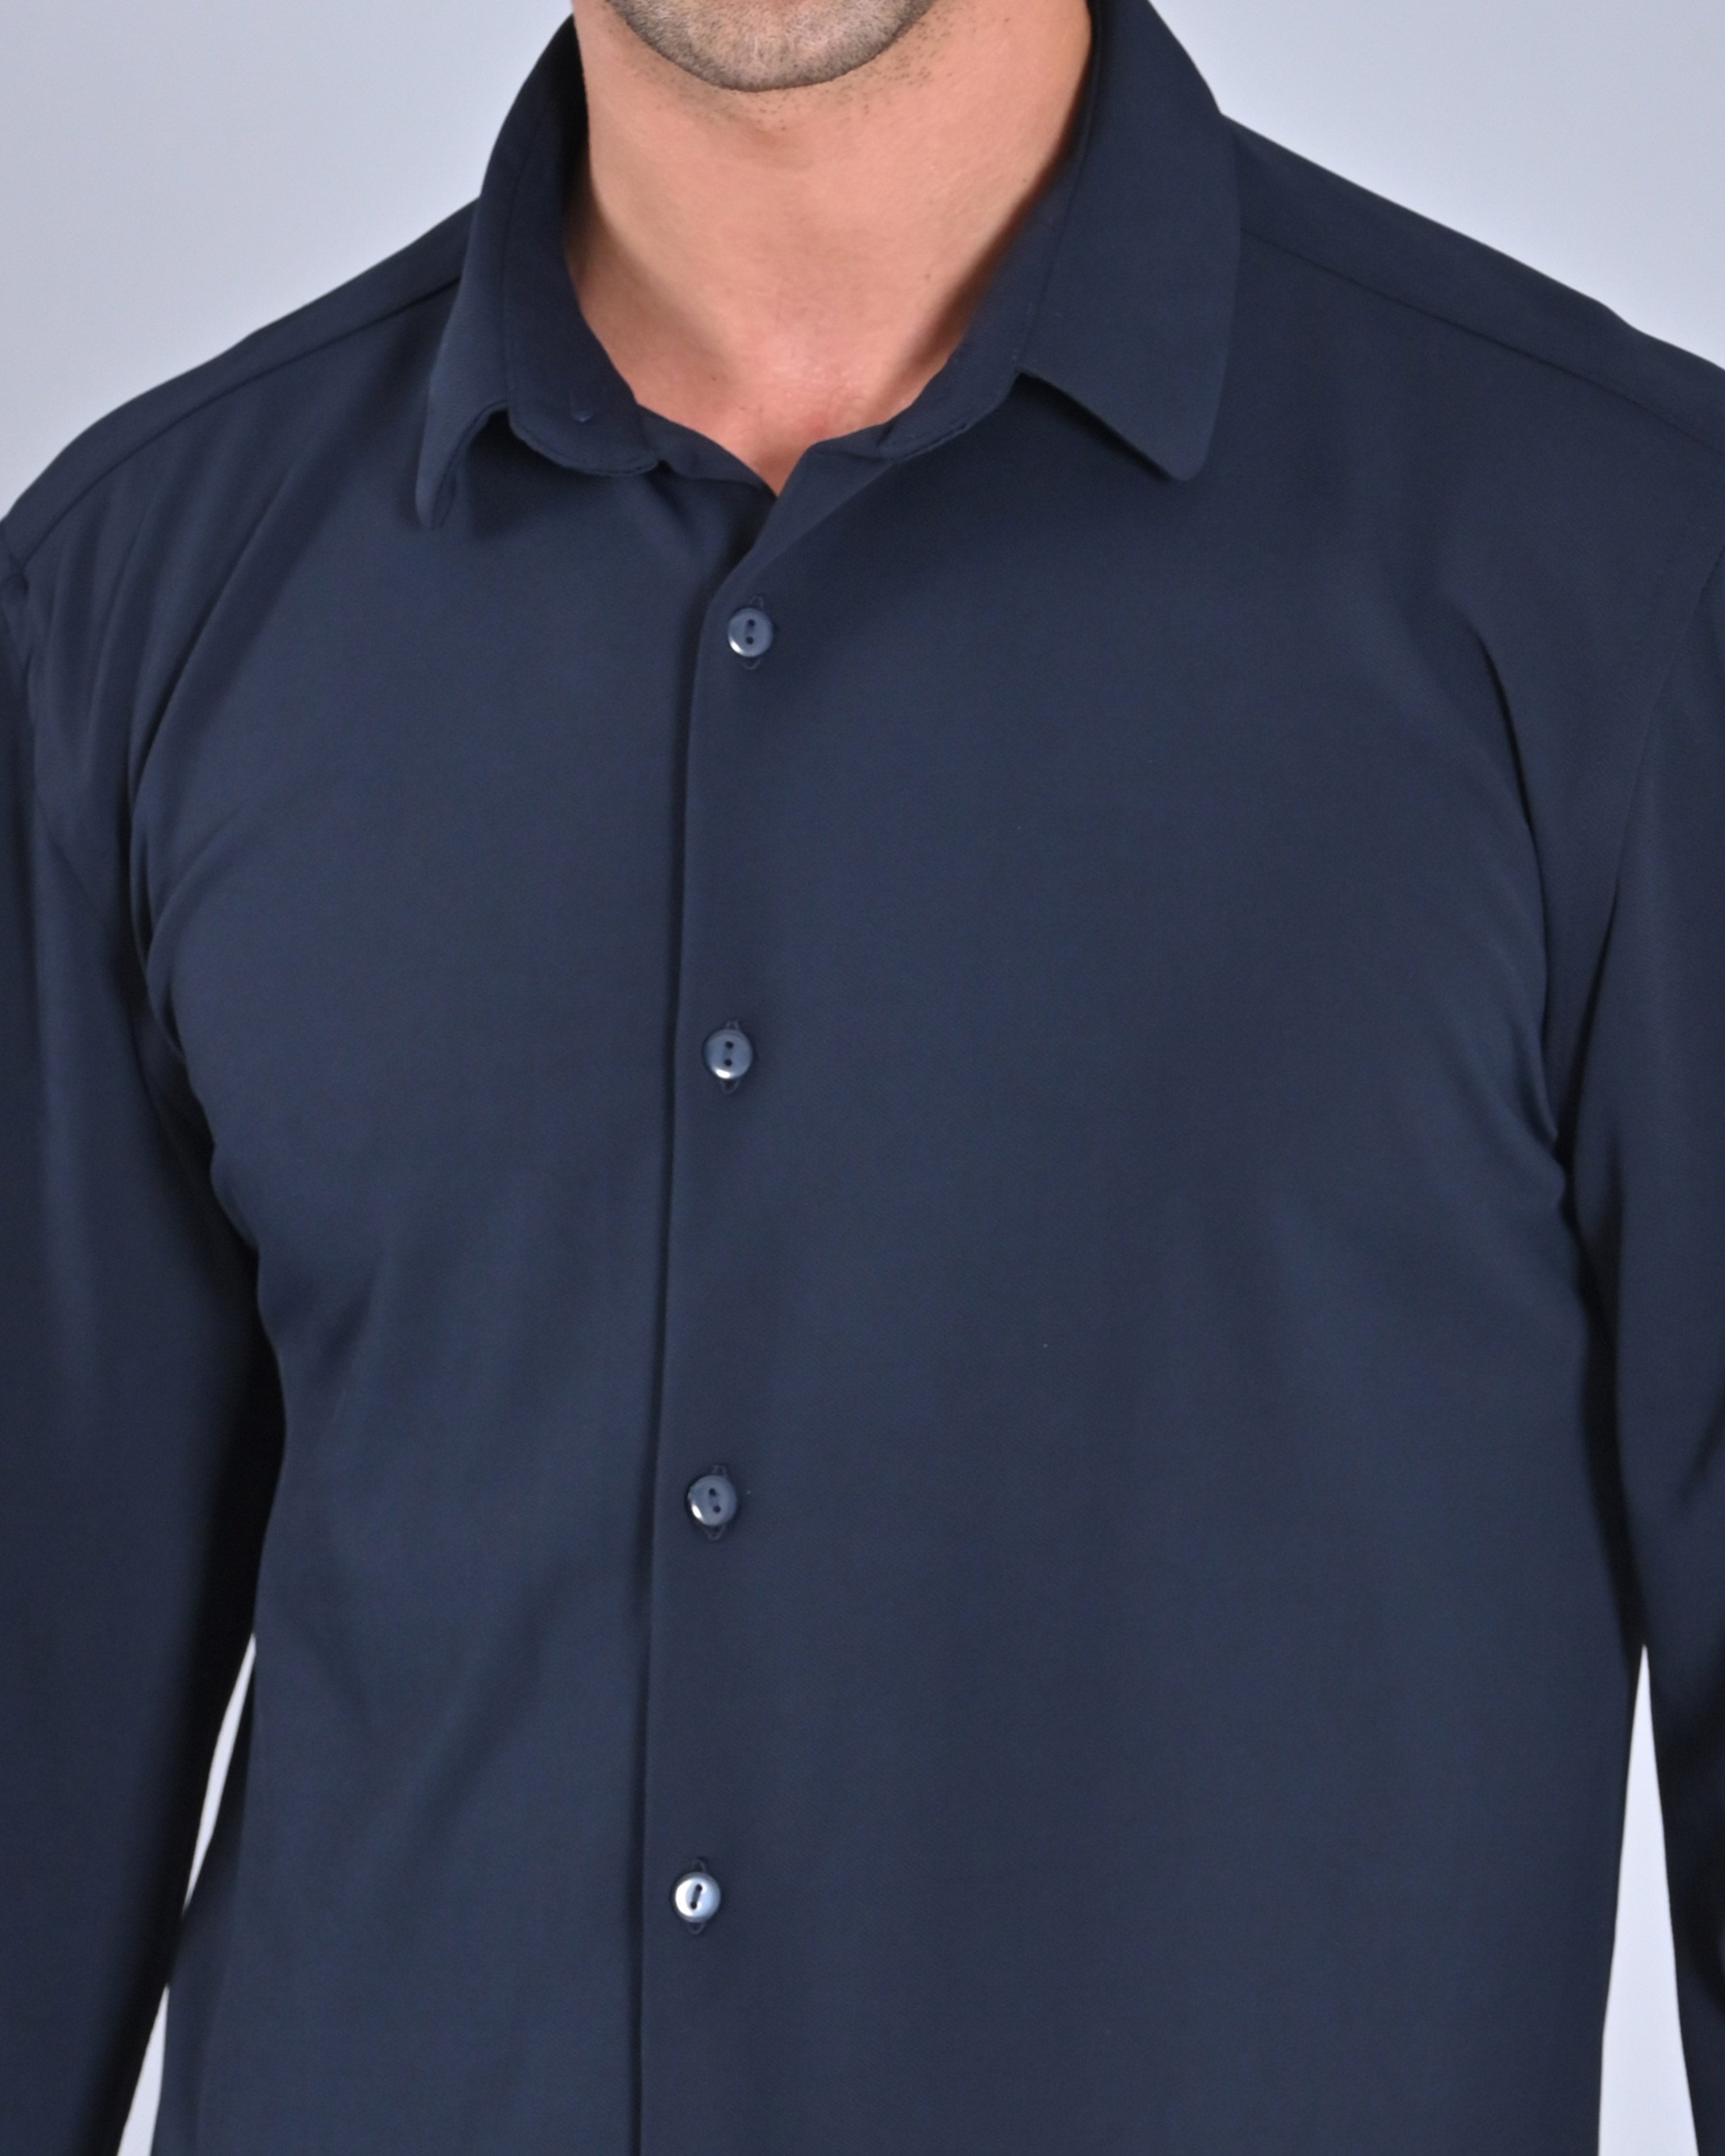 Shop Men's Solid Navy Blue Shirt